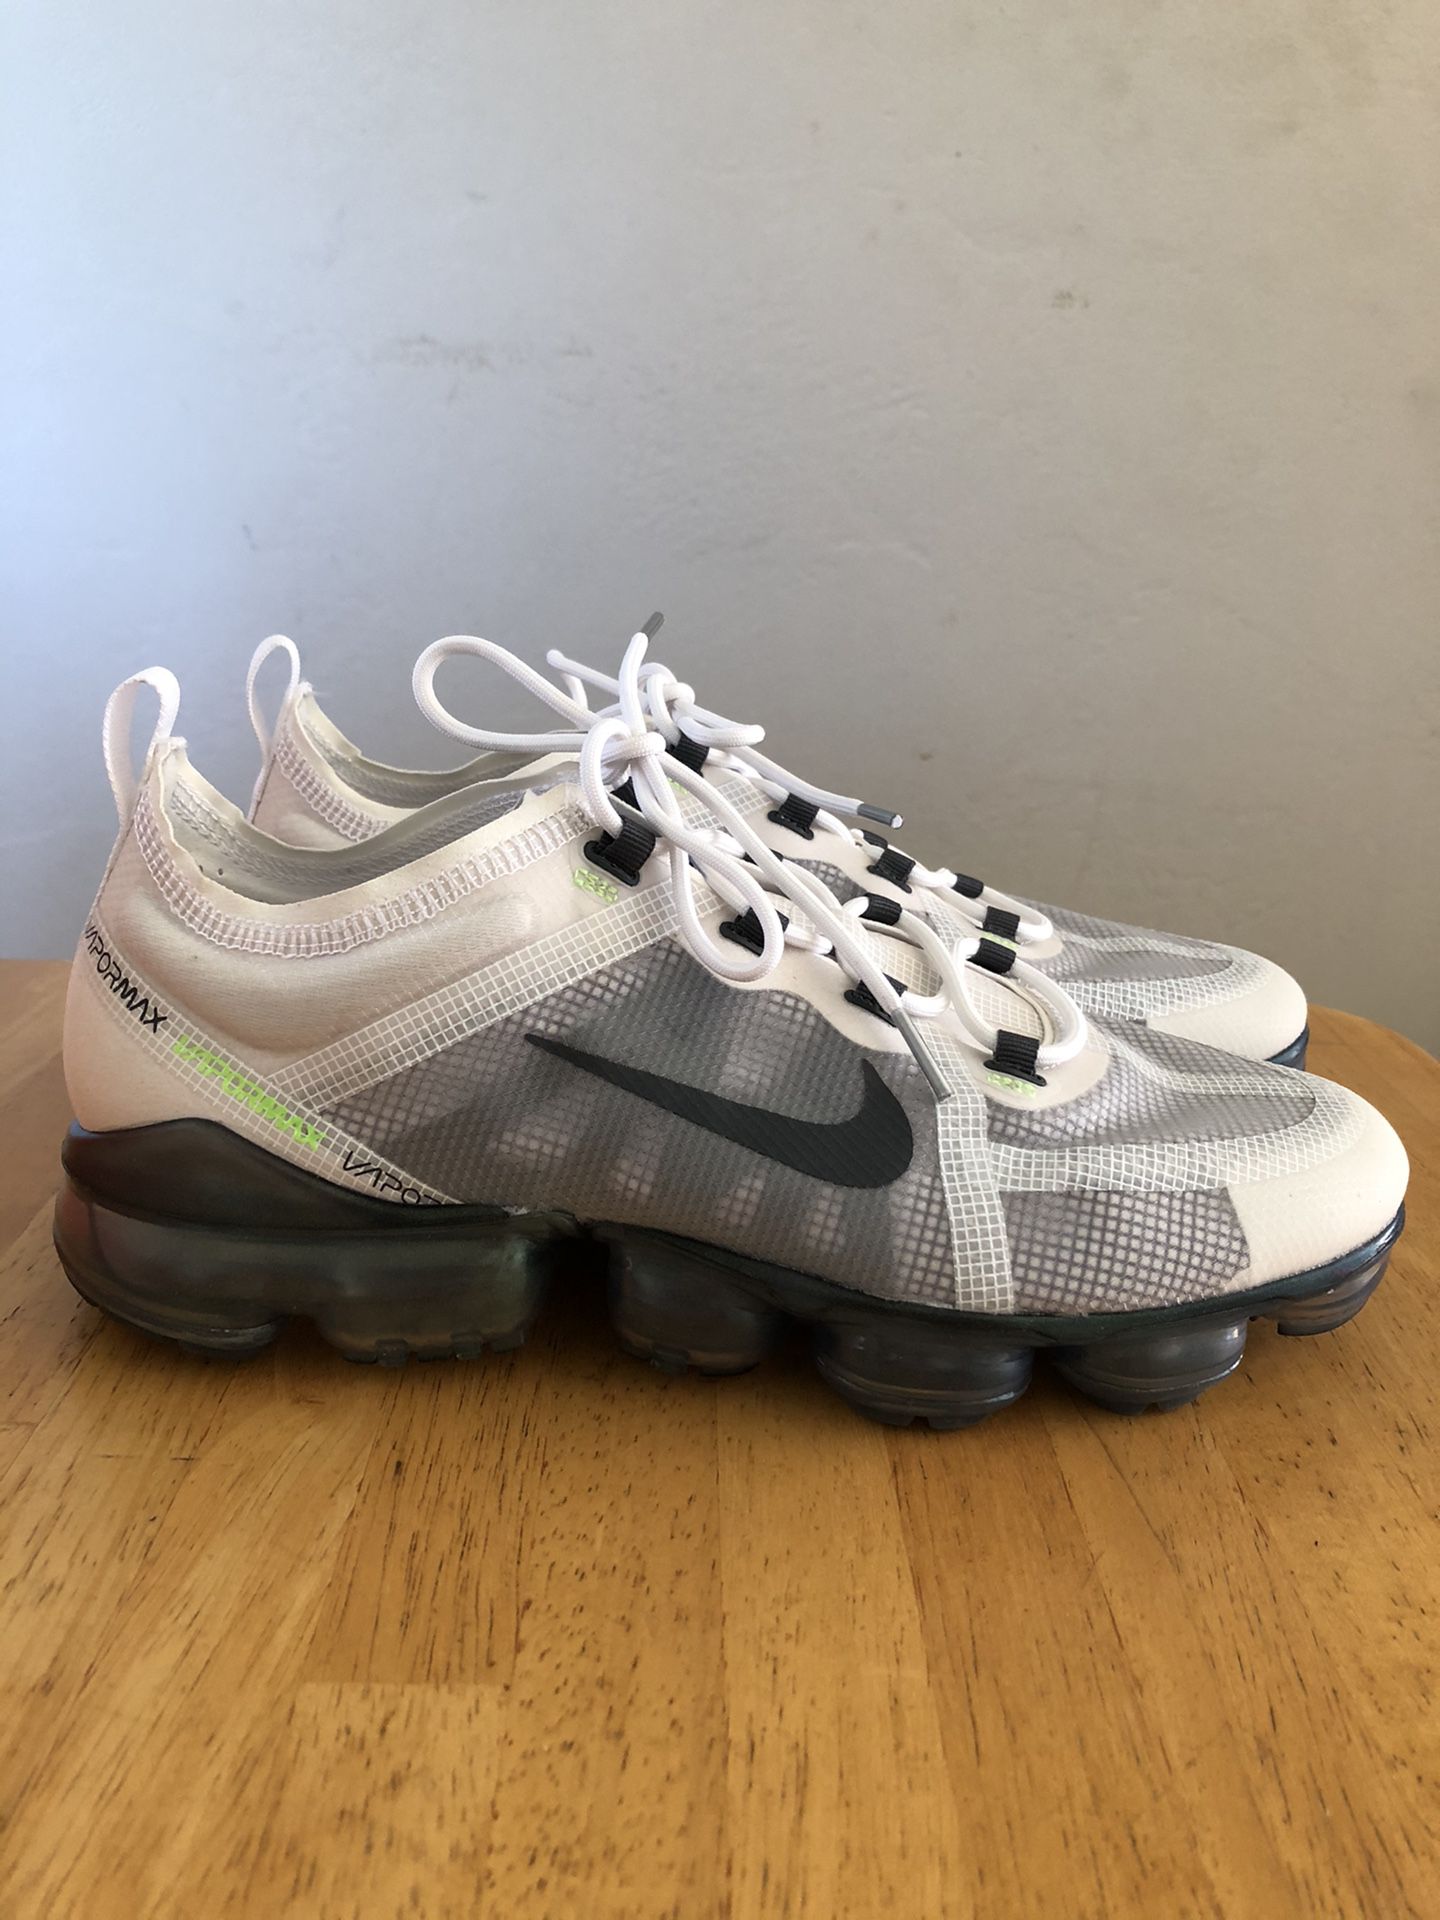 Brand new Nike air vapor max 2019 white gray running shoes men’s size 10